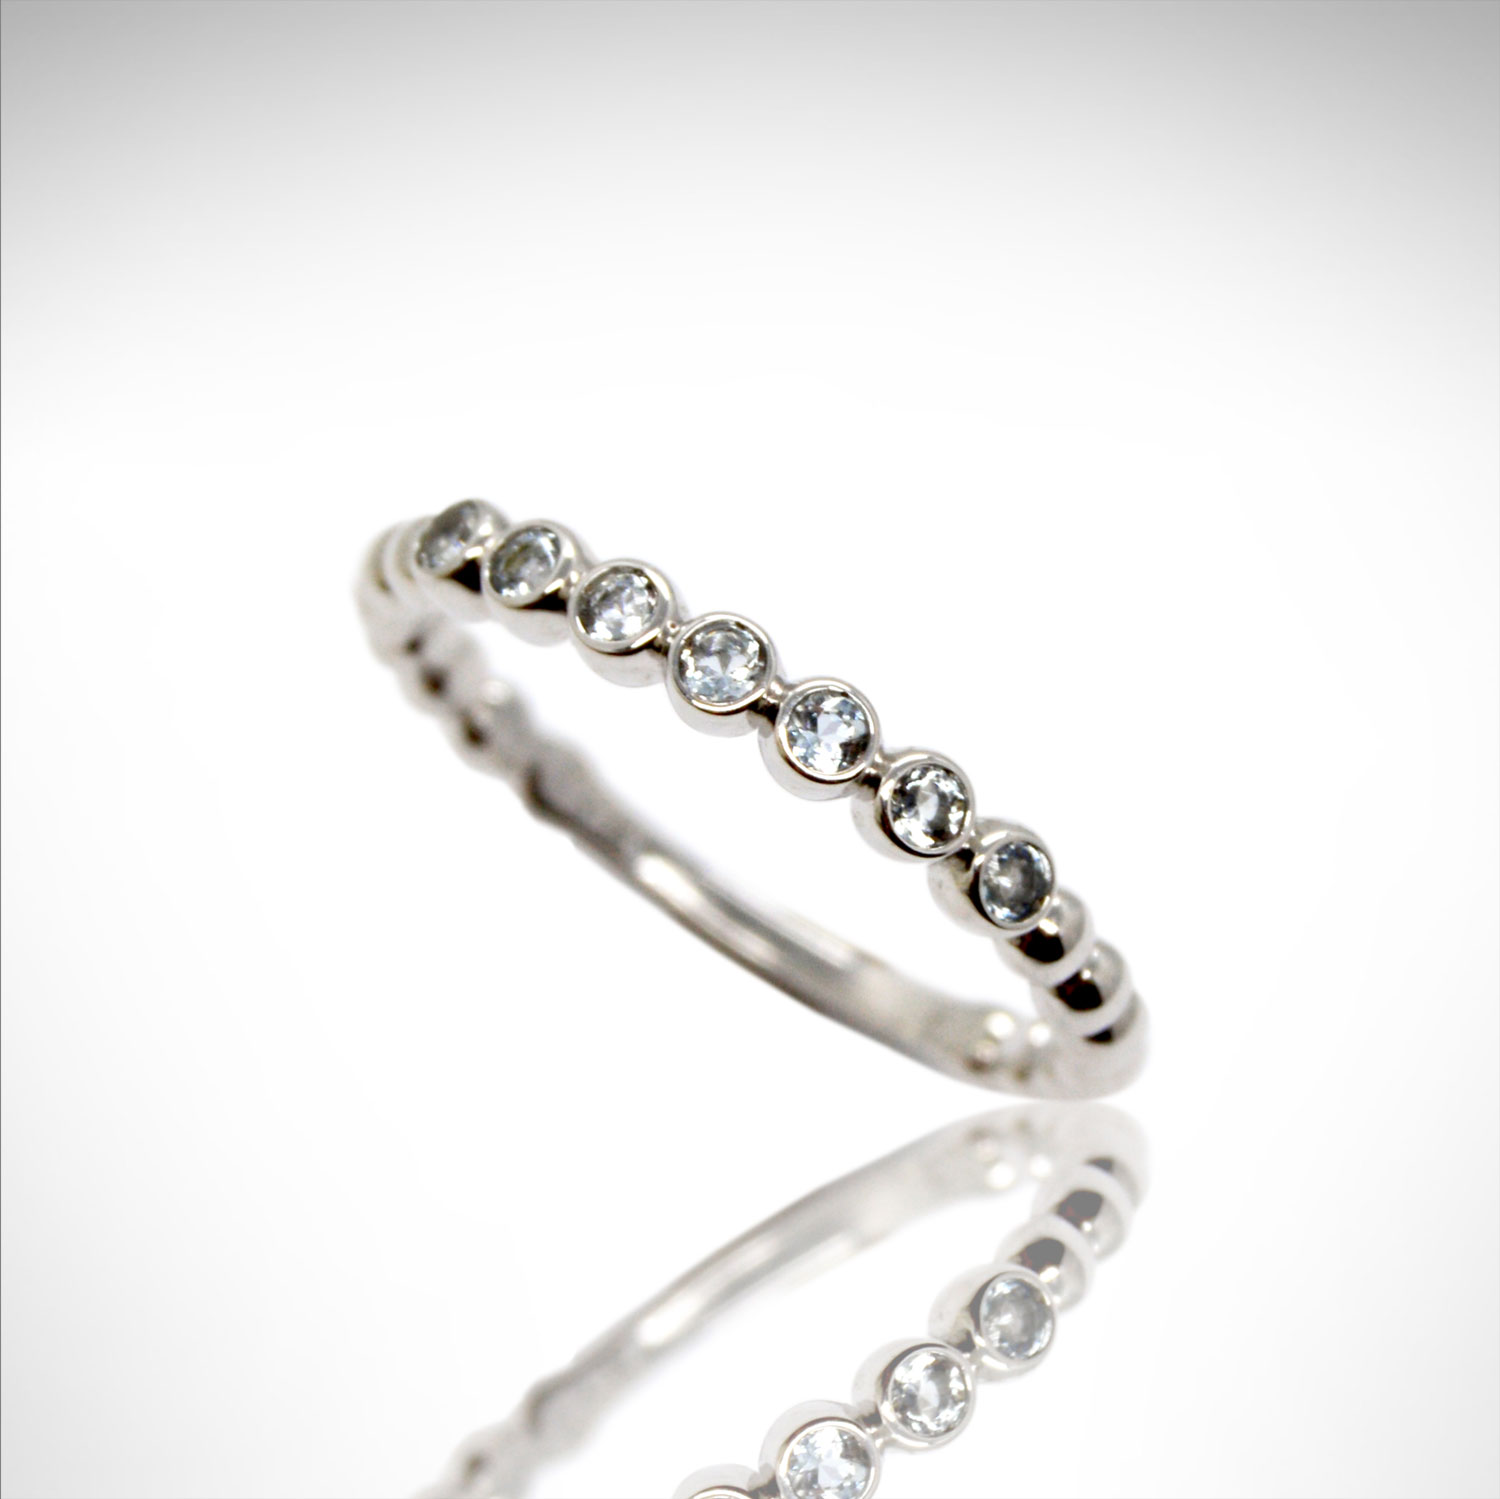 aquamarine gemstones in bezel settings, 14k white gold stackable ring